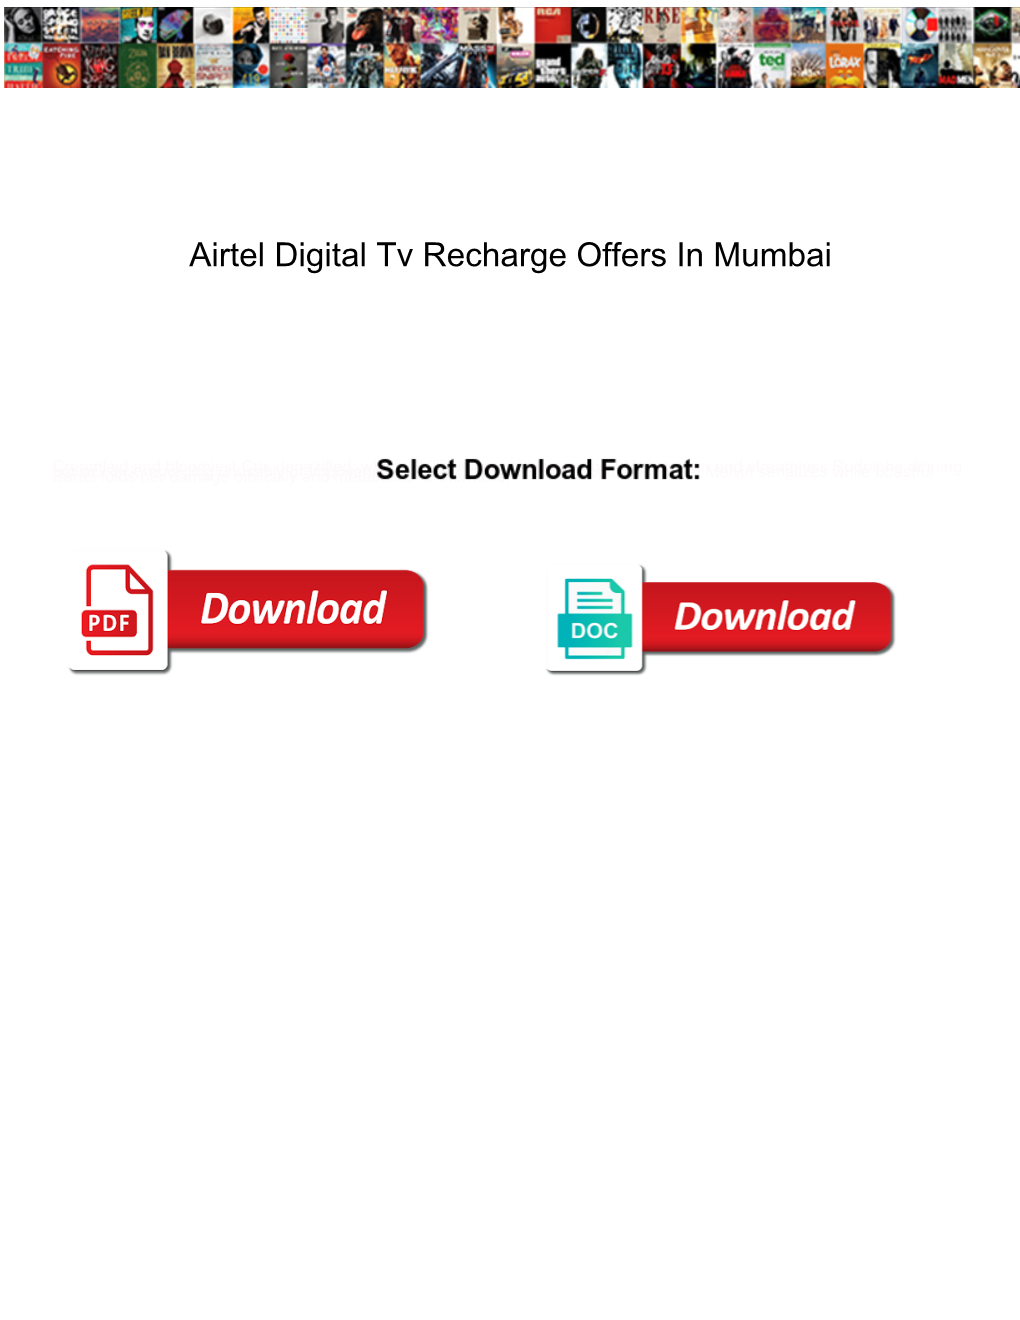 Airtel Digital Tv Recharge Offers in Mumbai